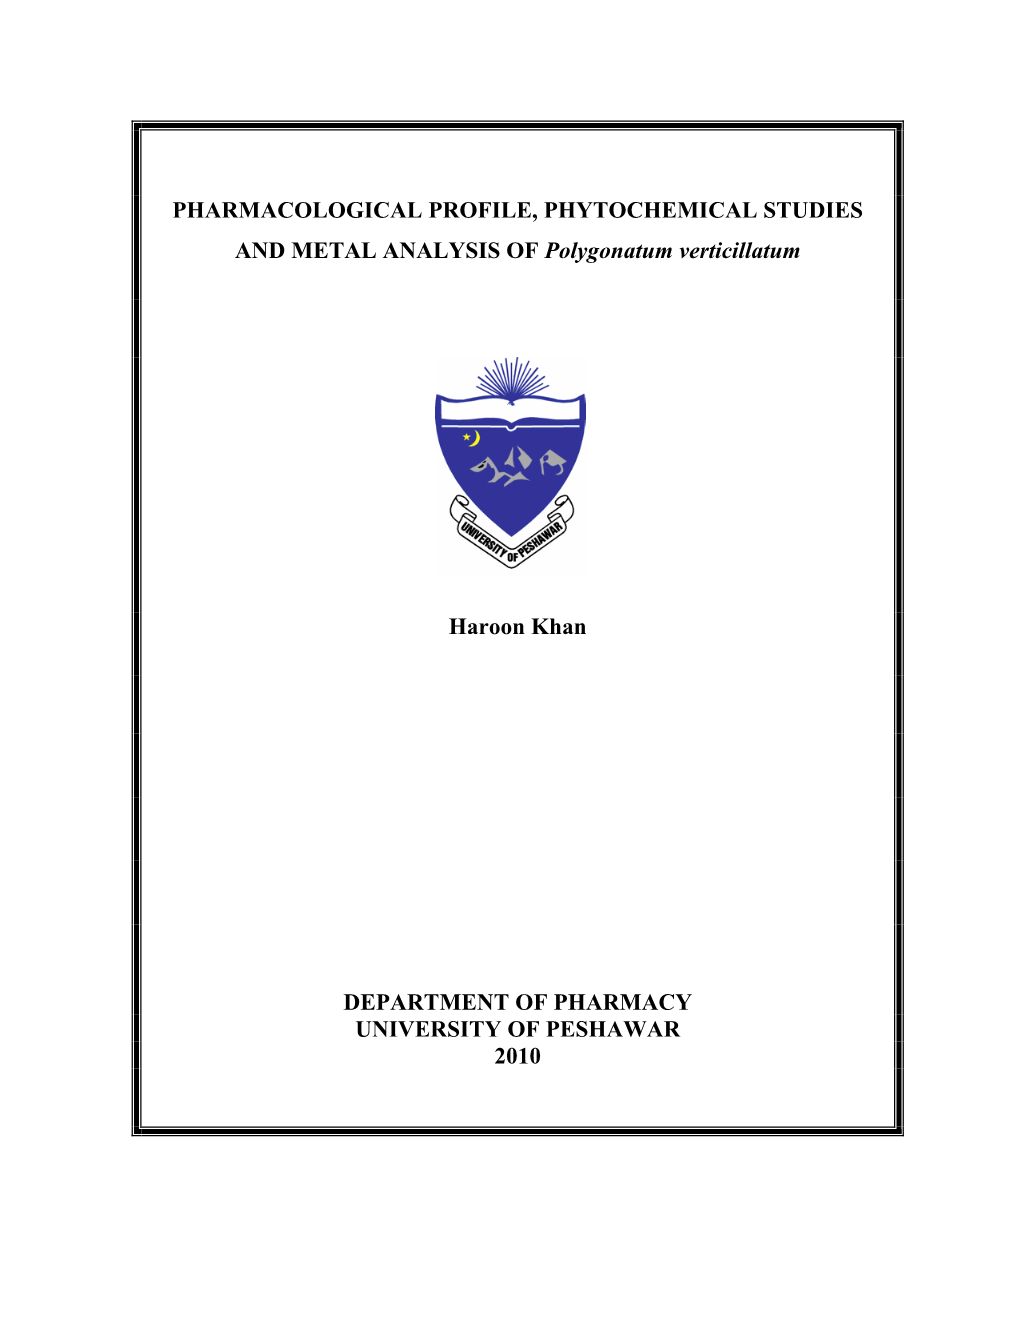 PHARMACOLOGICAL PROFILE, PHYTOCHEMICAL STUDIES and METAL ANALYSIS of Polygonatum Verticillatum